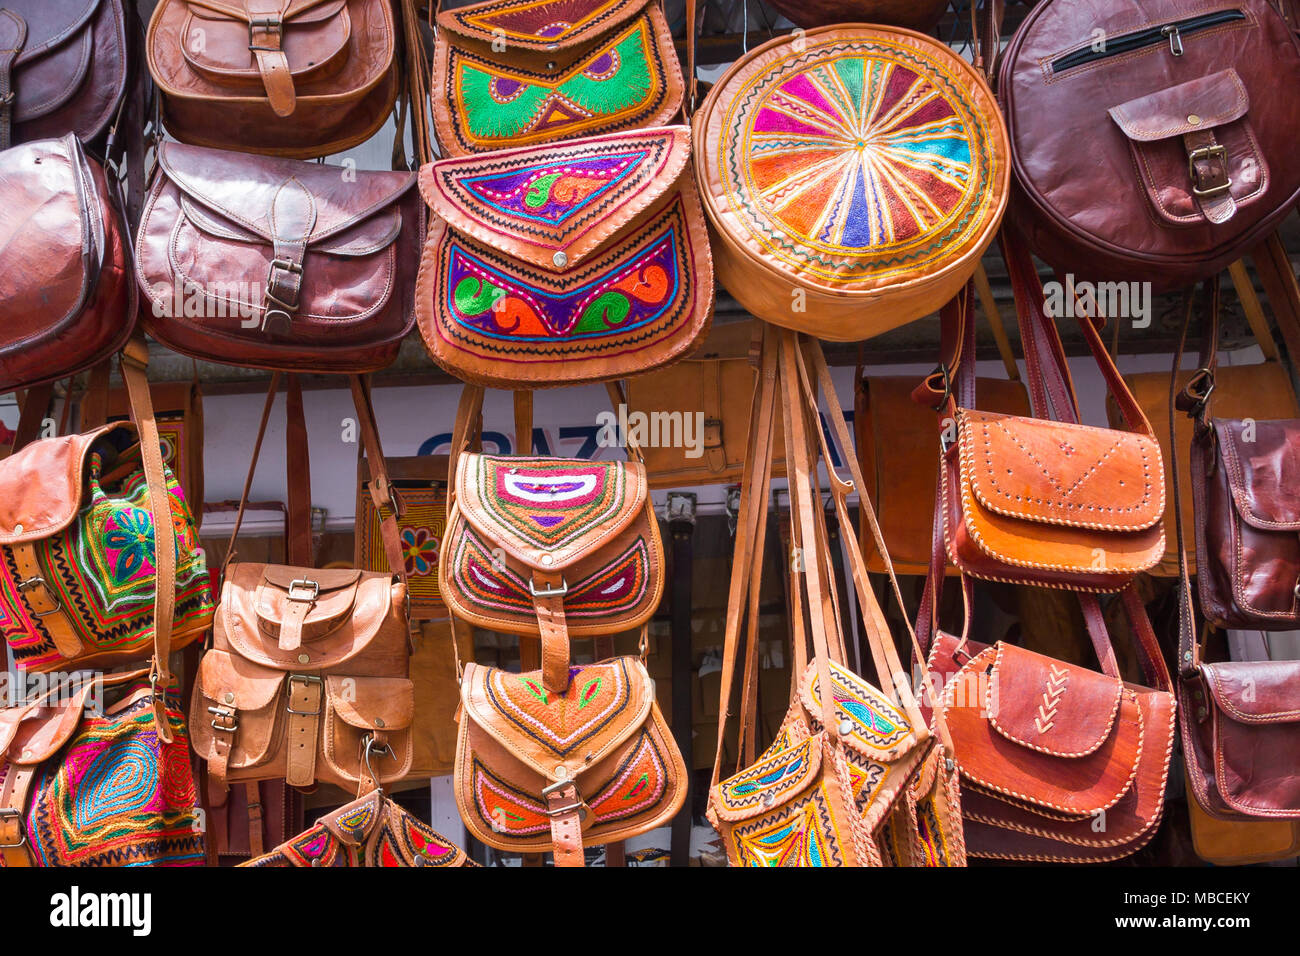 Amazon.com: Leather backpack handwoven purse - Hipster handbag - hobo bag -  Adjustable straps - kilim Rucksack Hippie Style for women : Handmade  Products